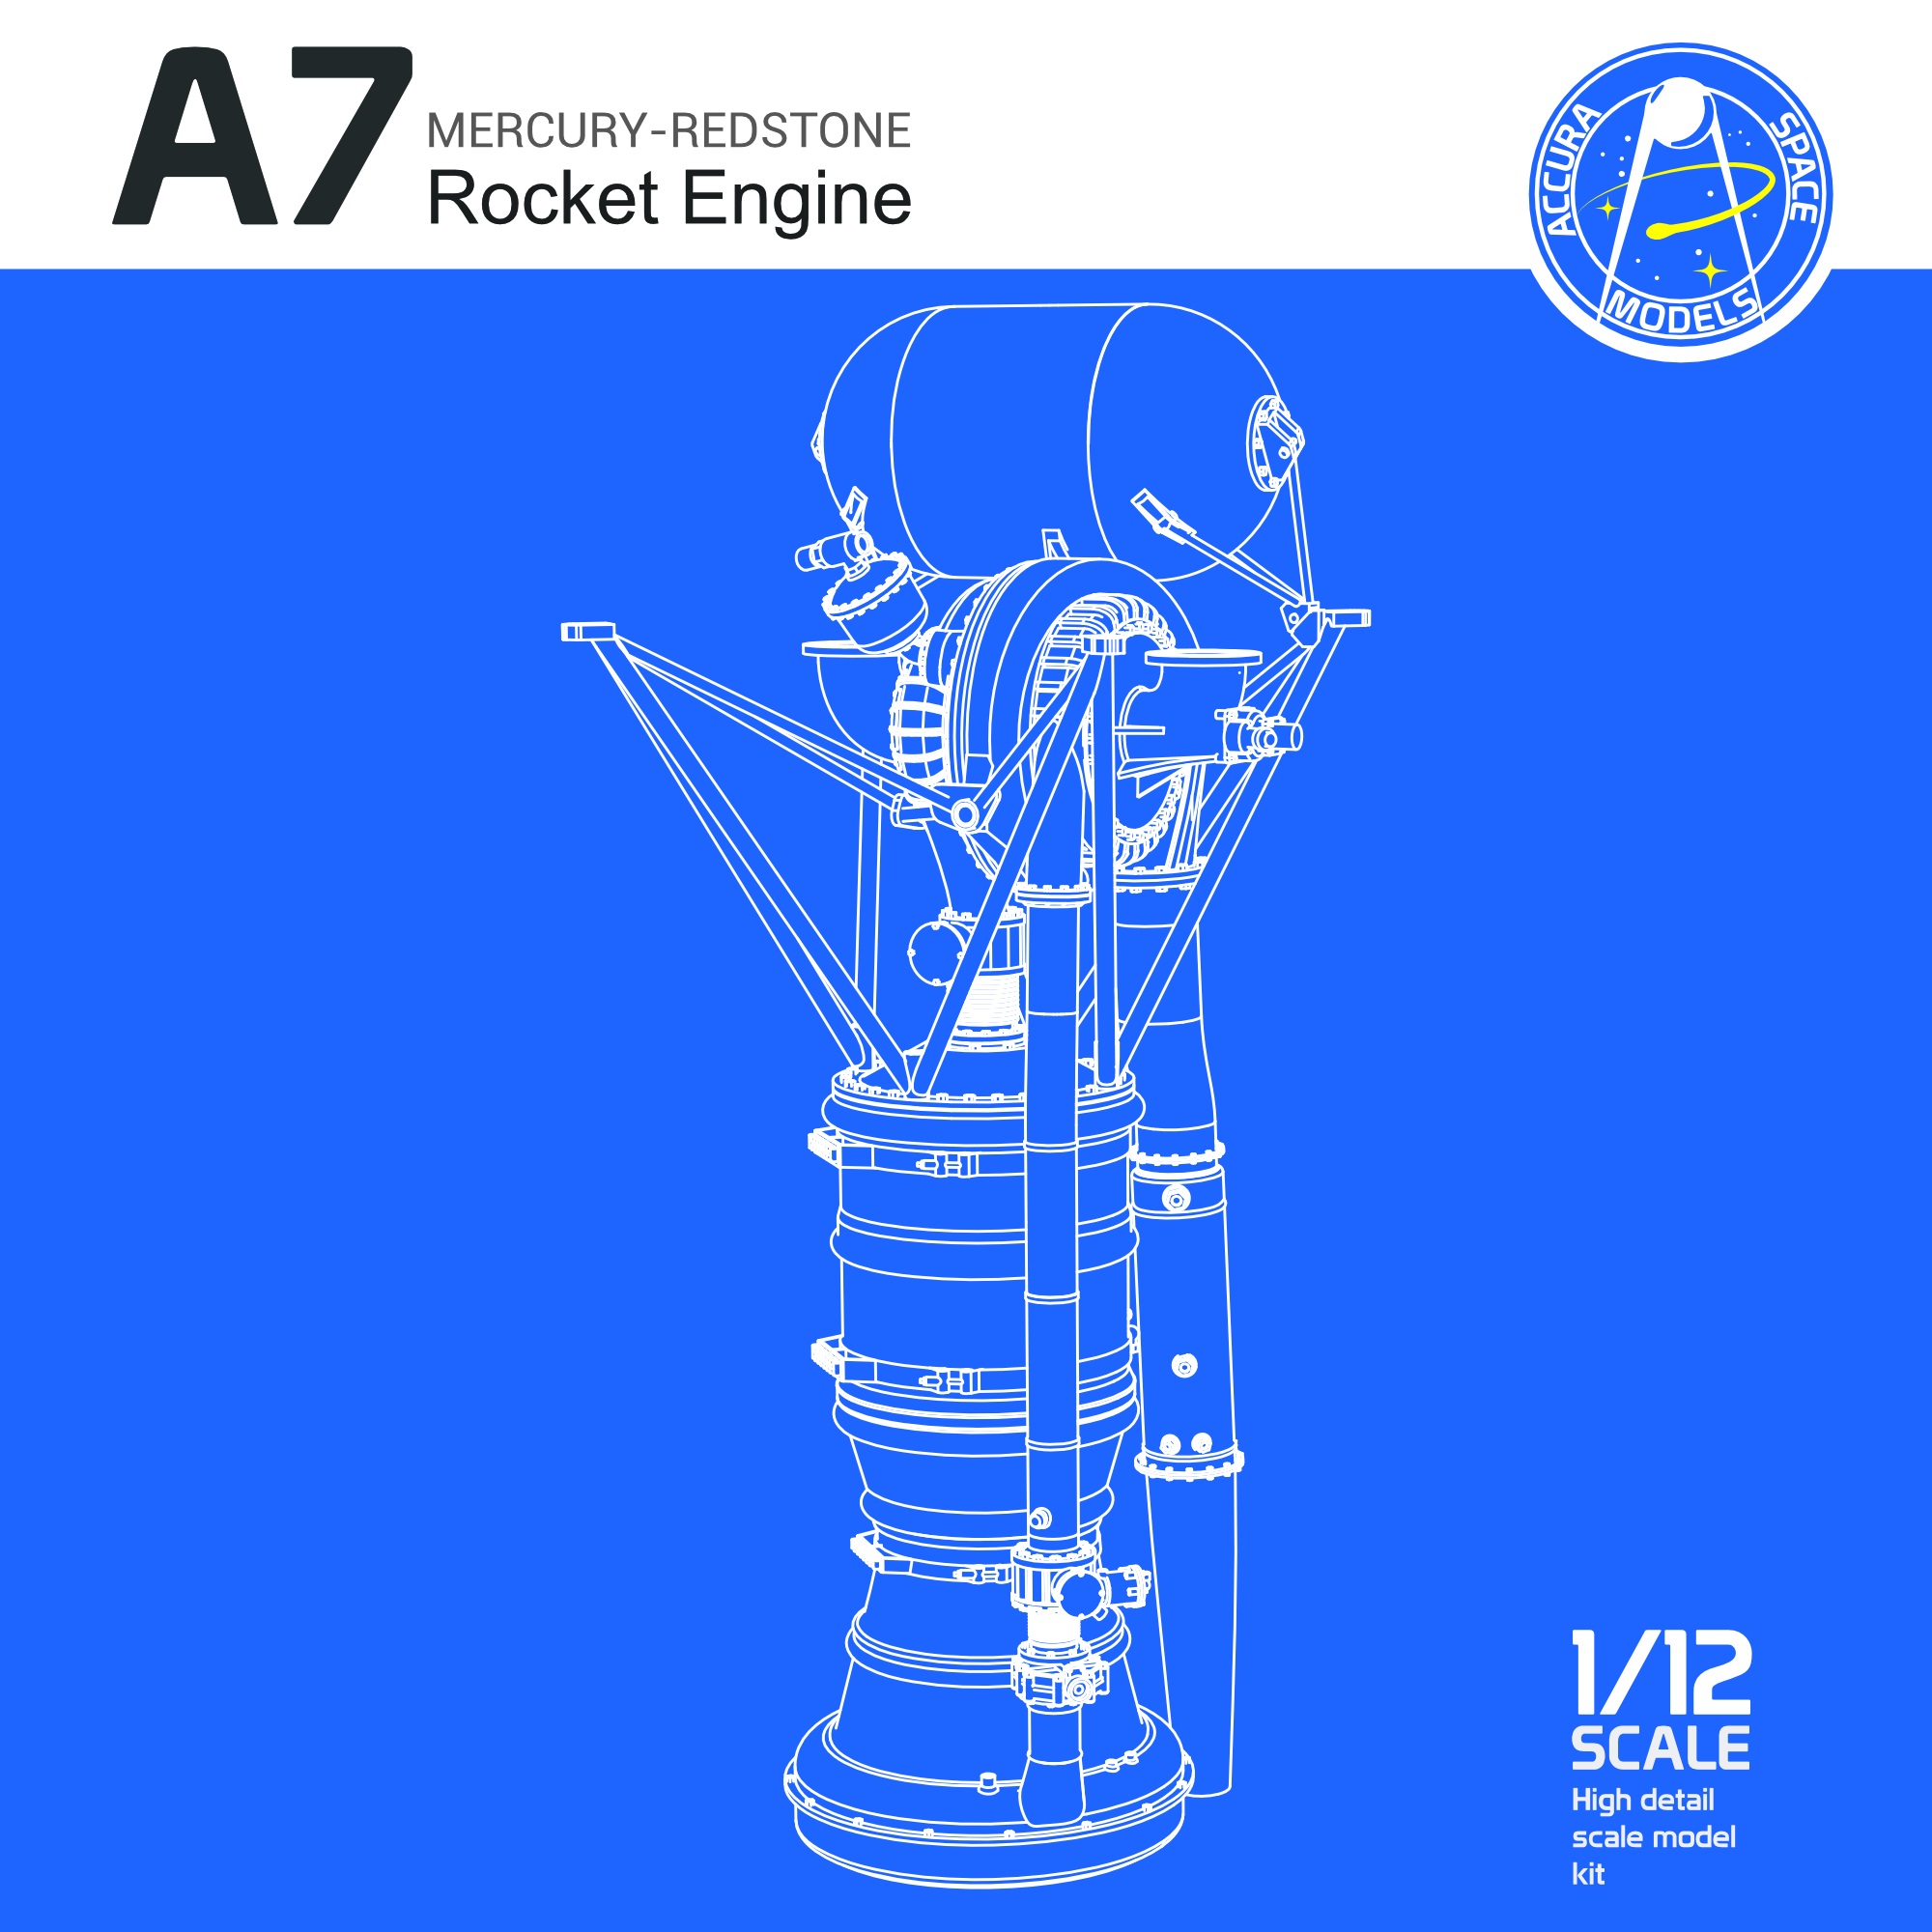 Rocket engine Mercury-Redstone A7 model KIT 1:12 